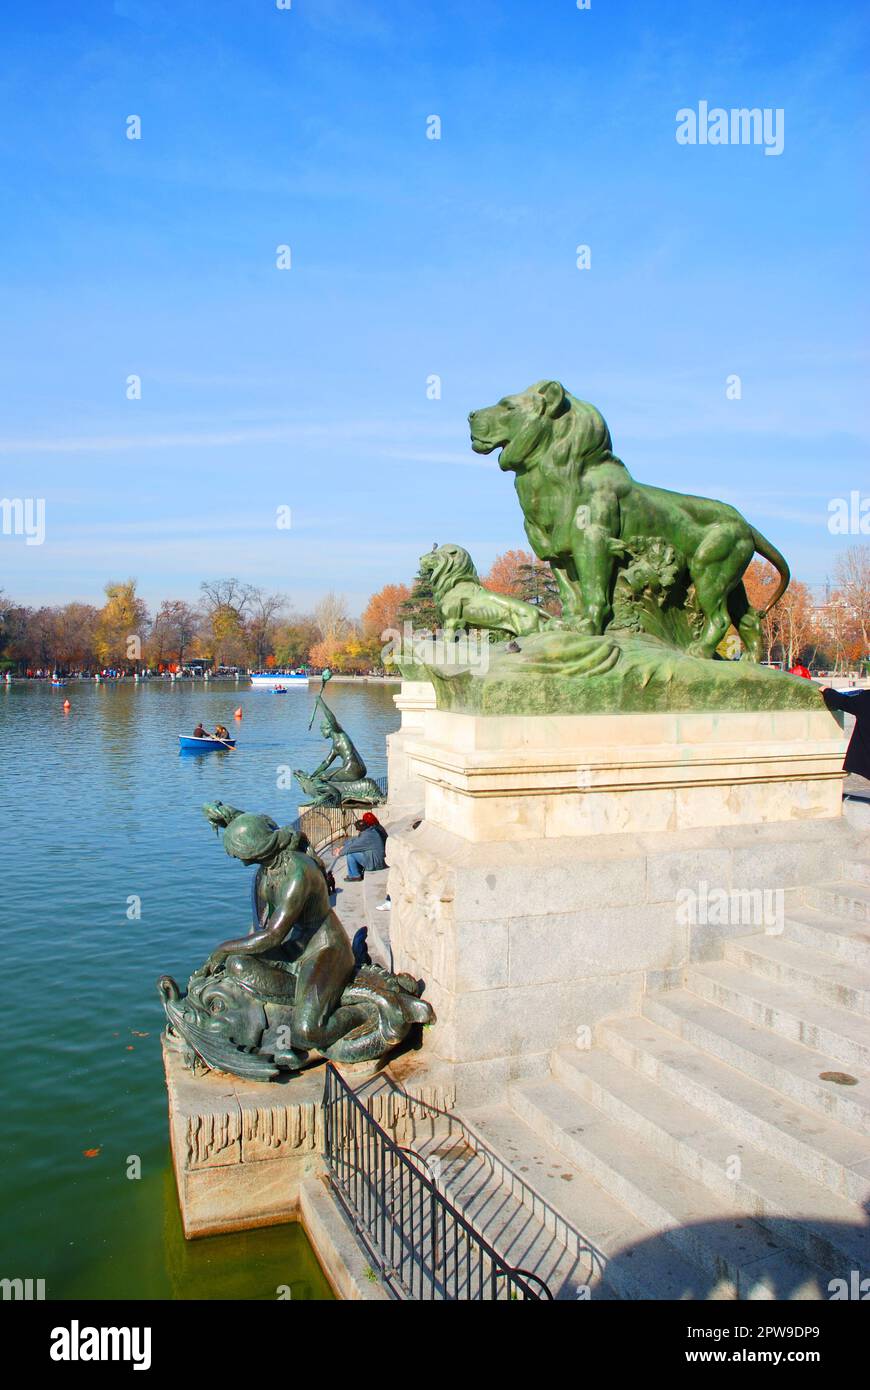 Sculptures in the pond. El Retiro park, Madrid, Spain. Stock Photo